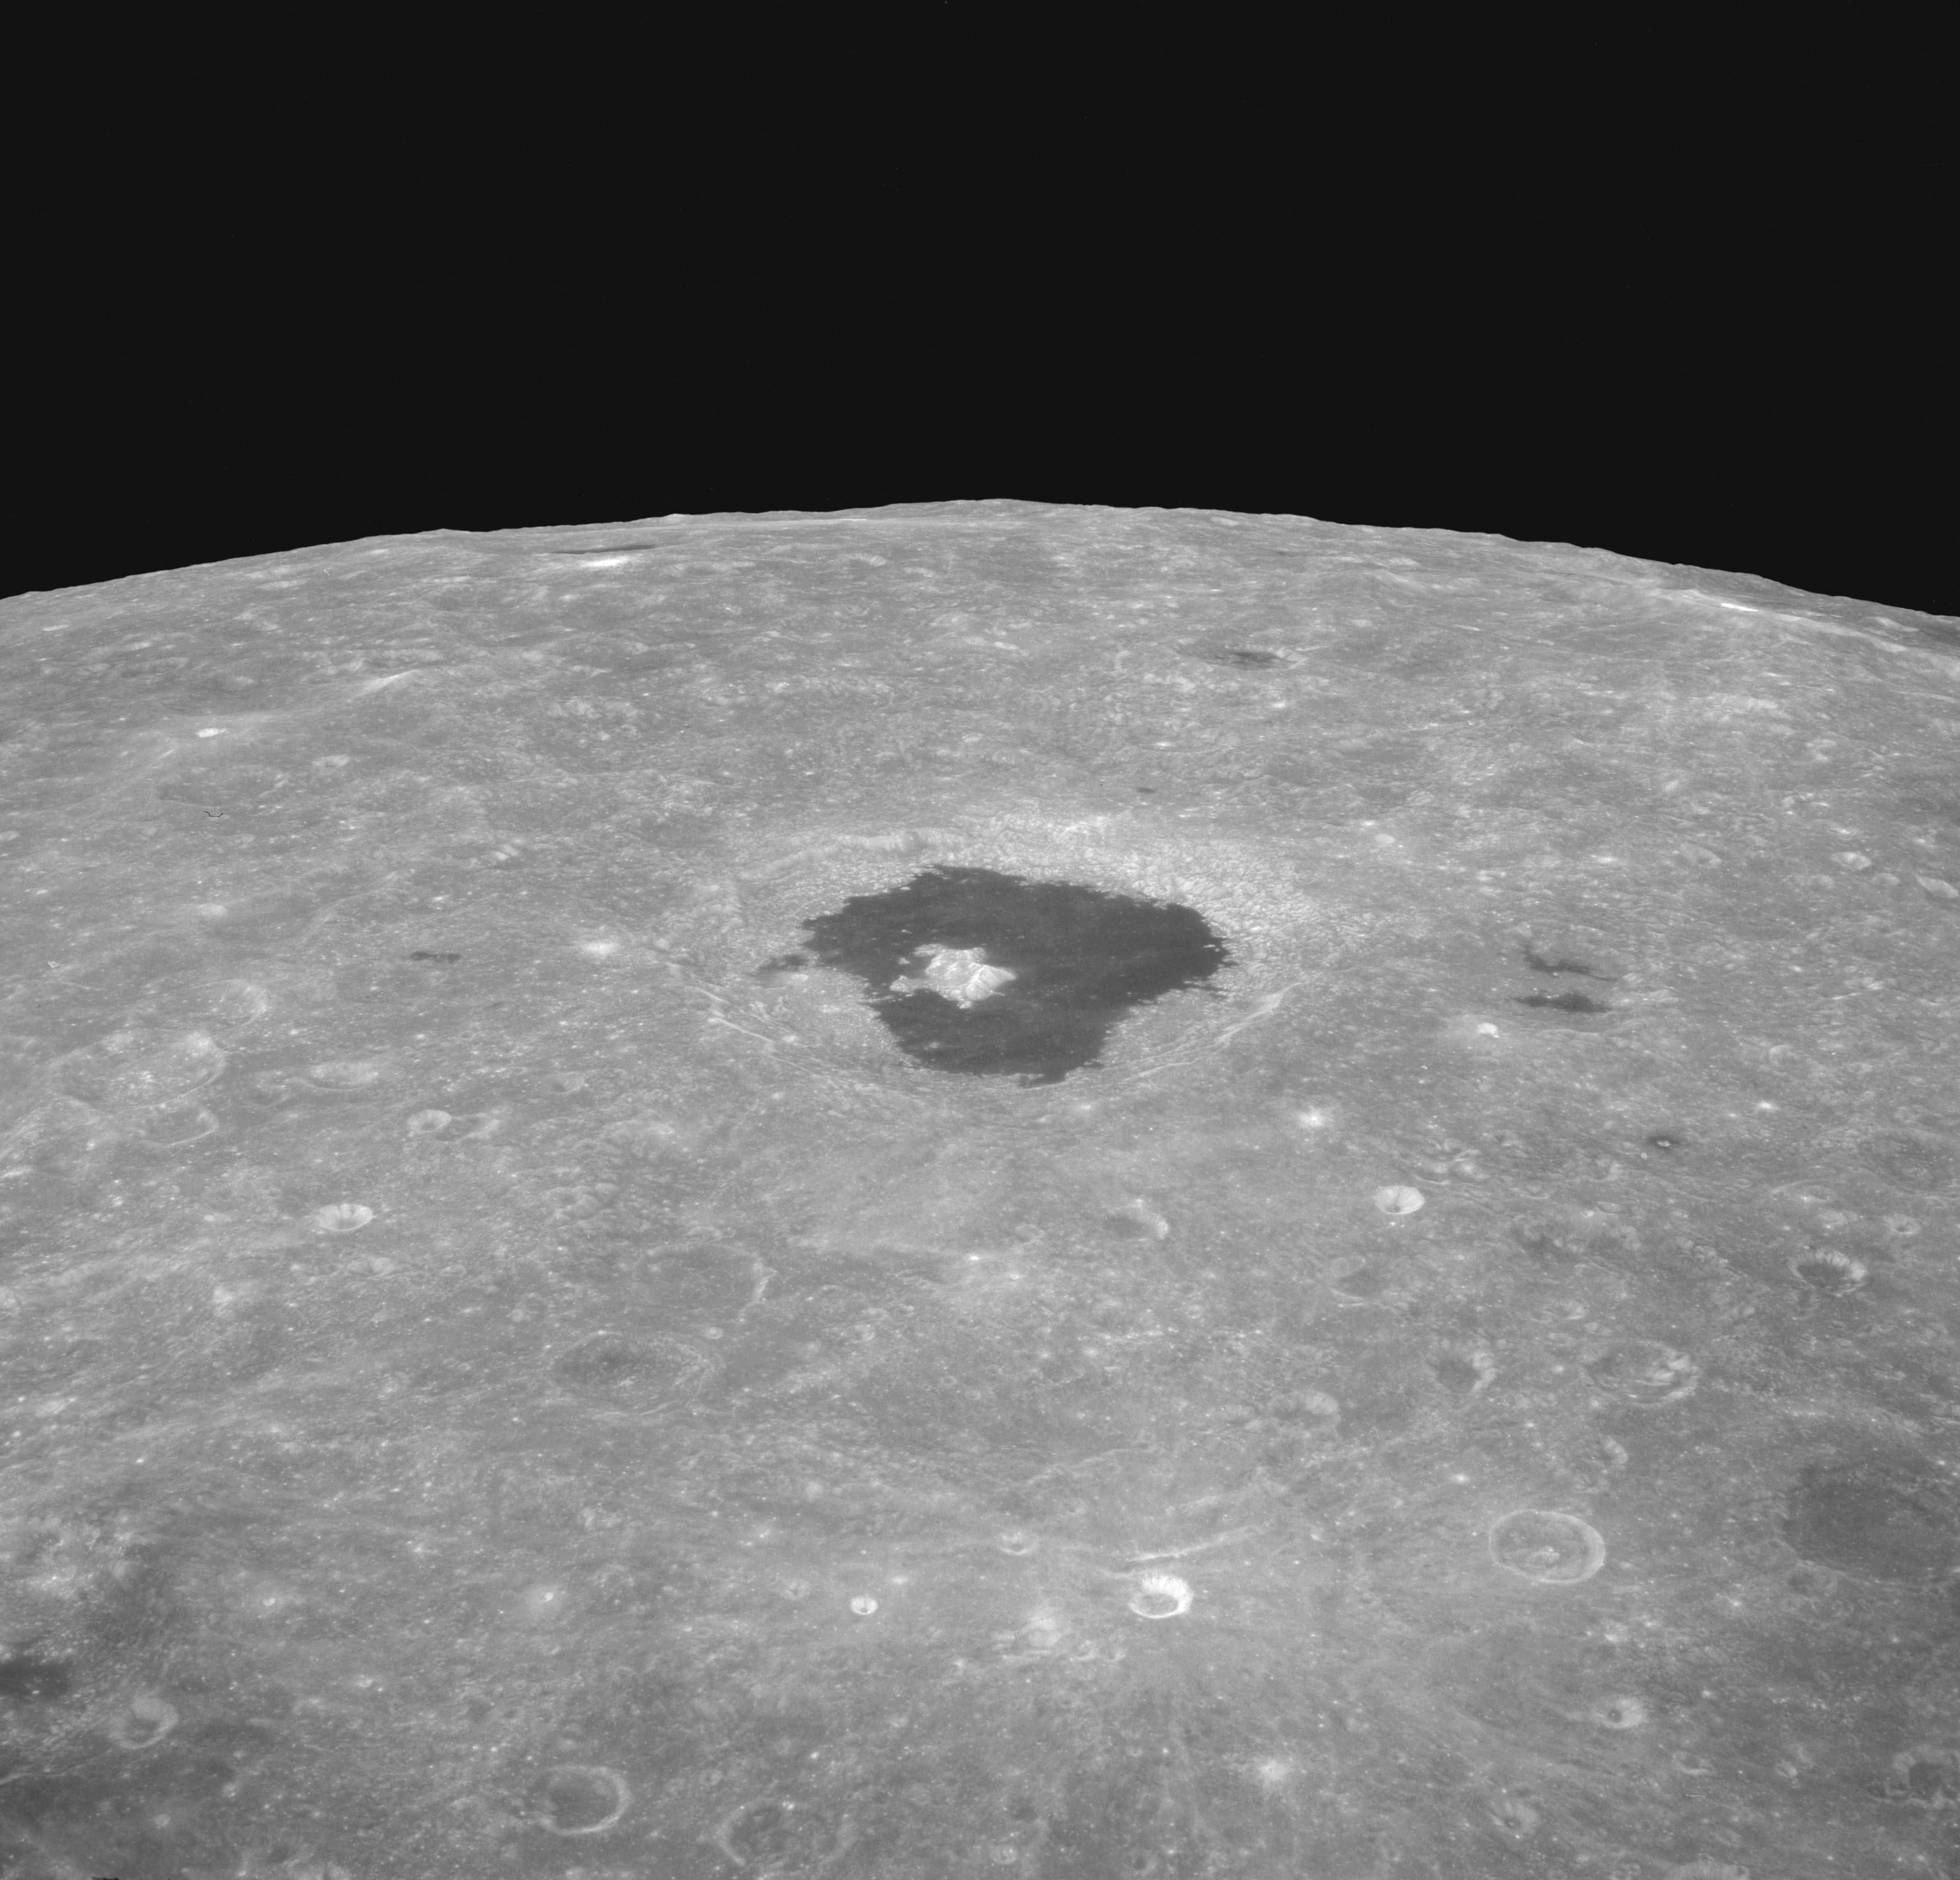 Луна поверхность кратеры. Кратер Циолковского на Луне. Кратер Аполлон. Кратер Ломоносова. Циолковский (лунный кратер).